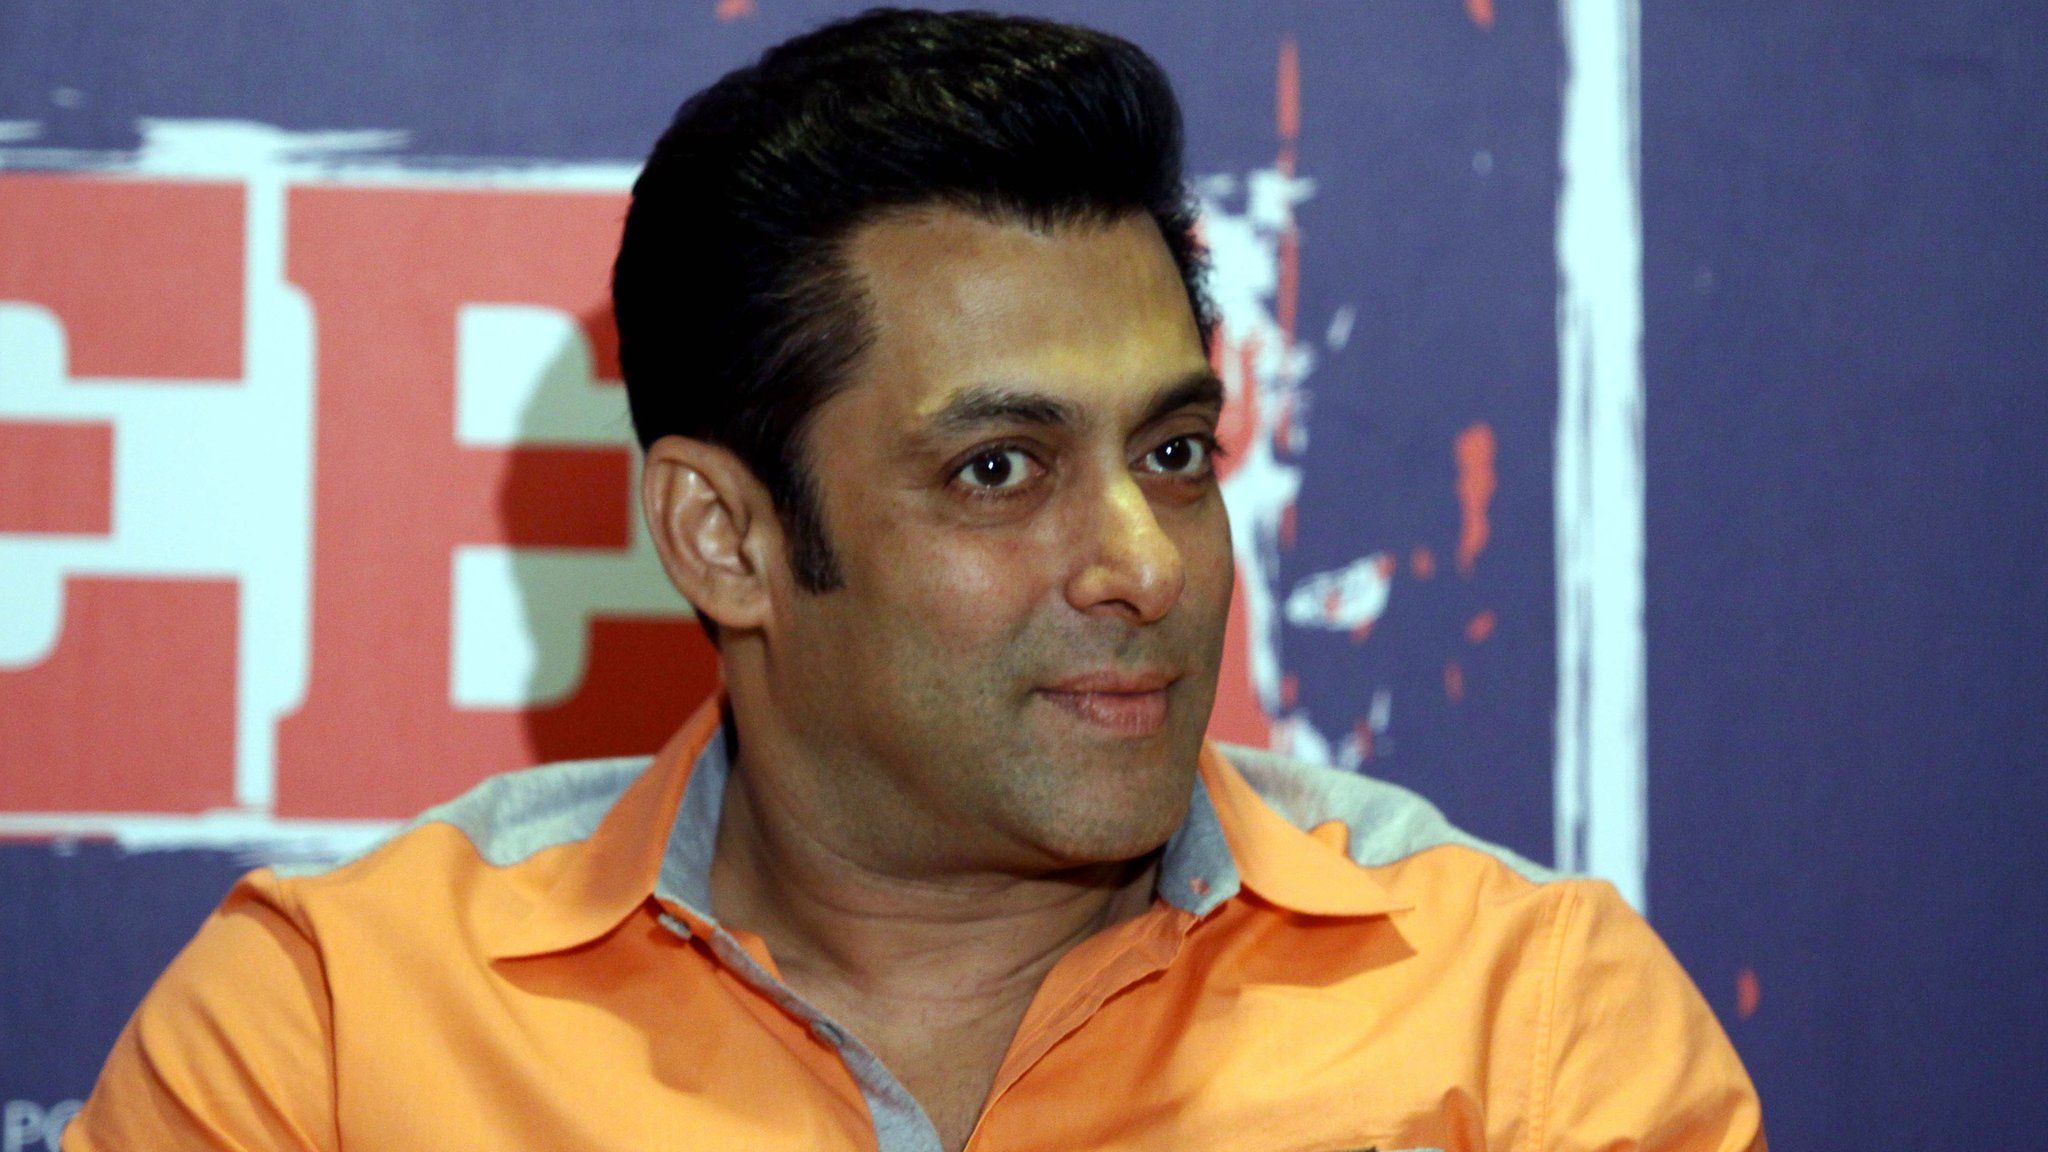 Salman Forced Sex - India uproar over Salman Khan 'raped woman' comment - BBC News